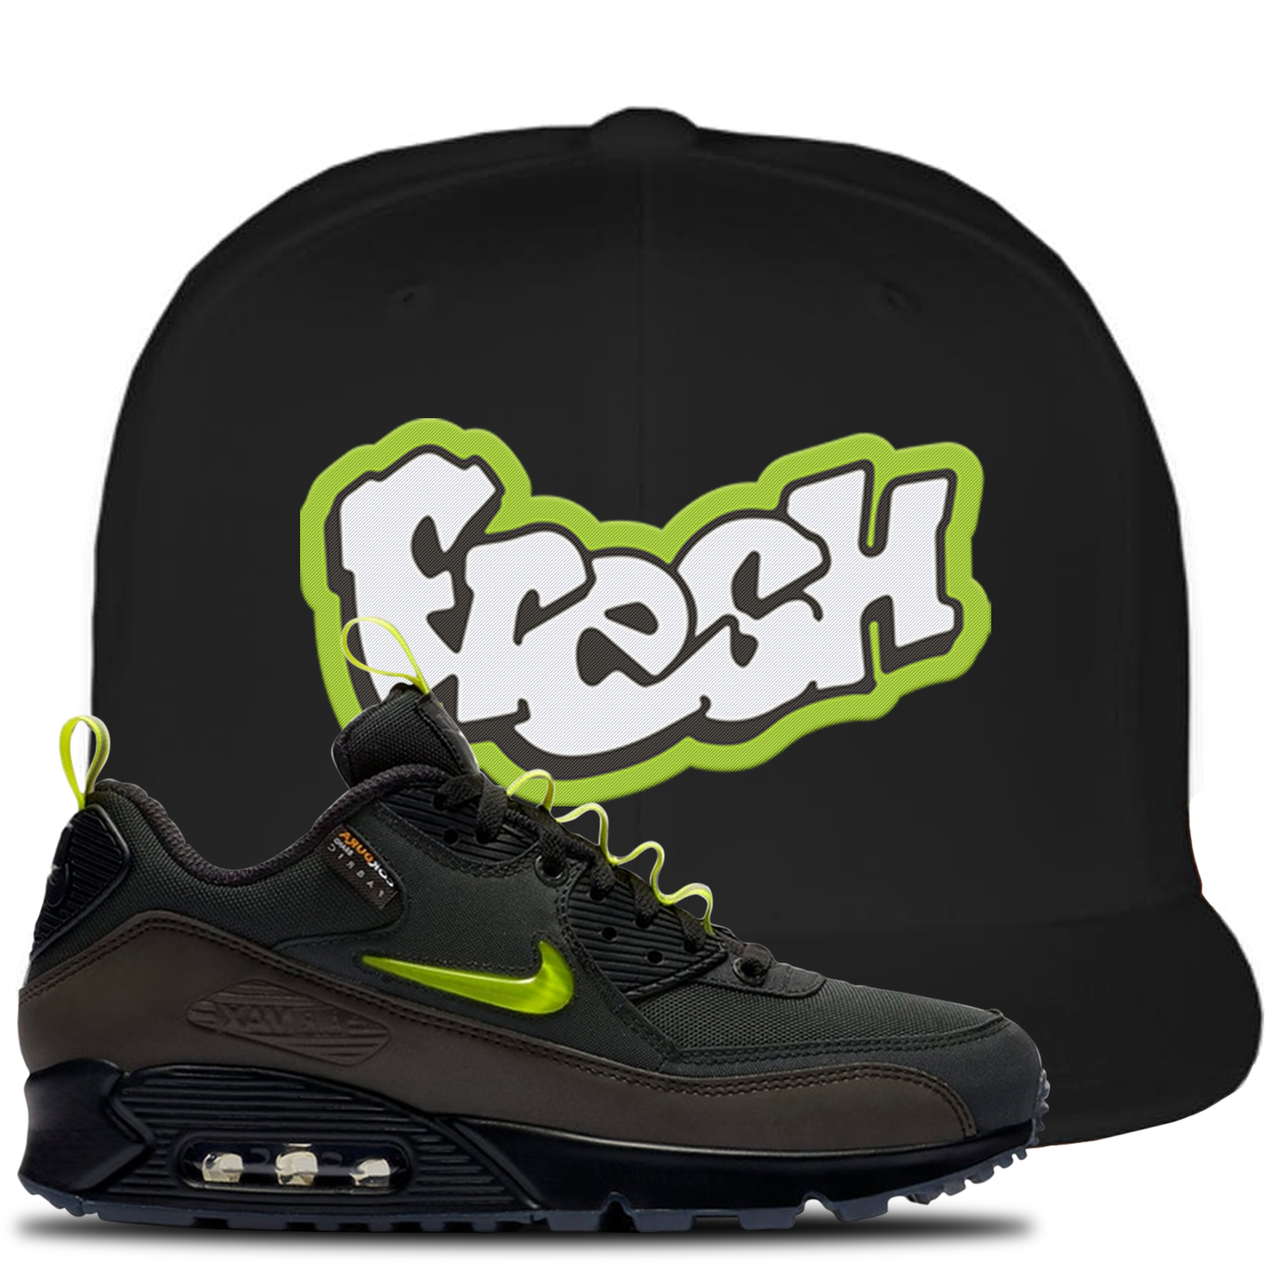 The Basement X Air Max 90 Manchester Fresh Black Sneaker Hook Up Snapback Hat